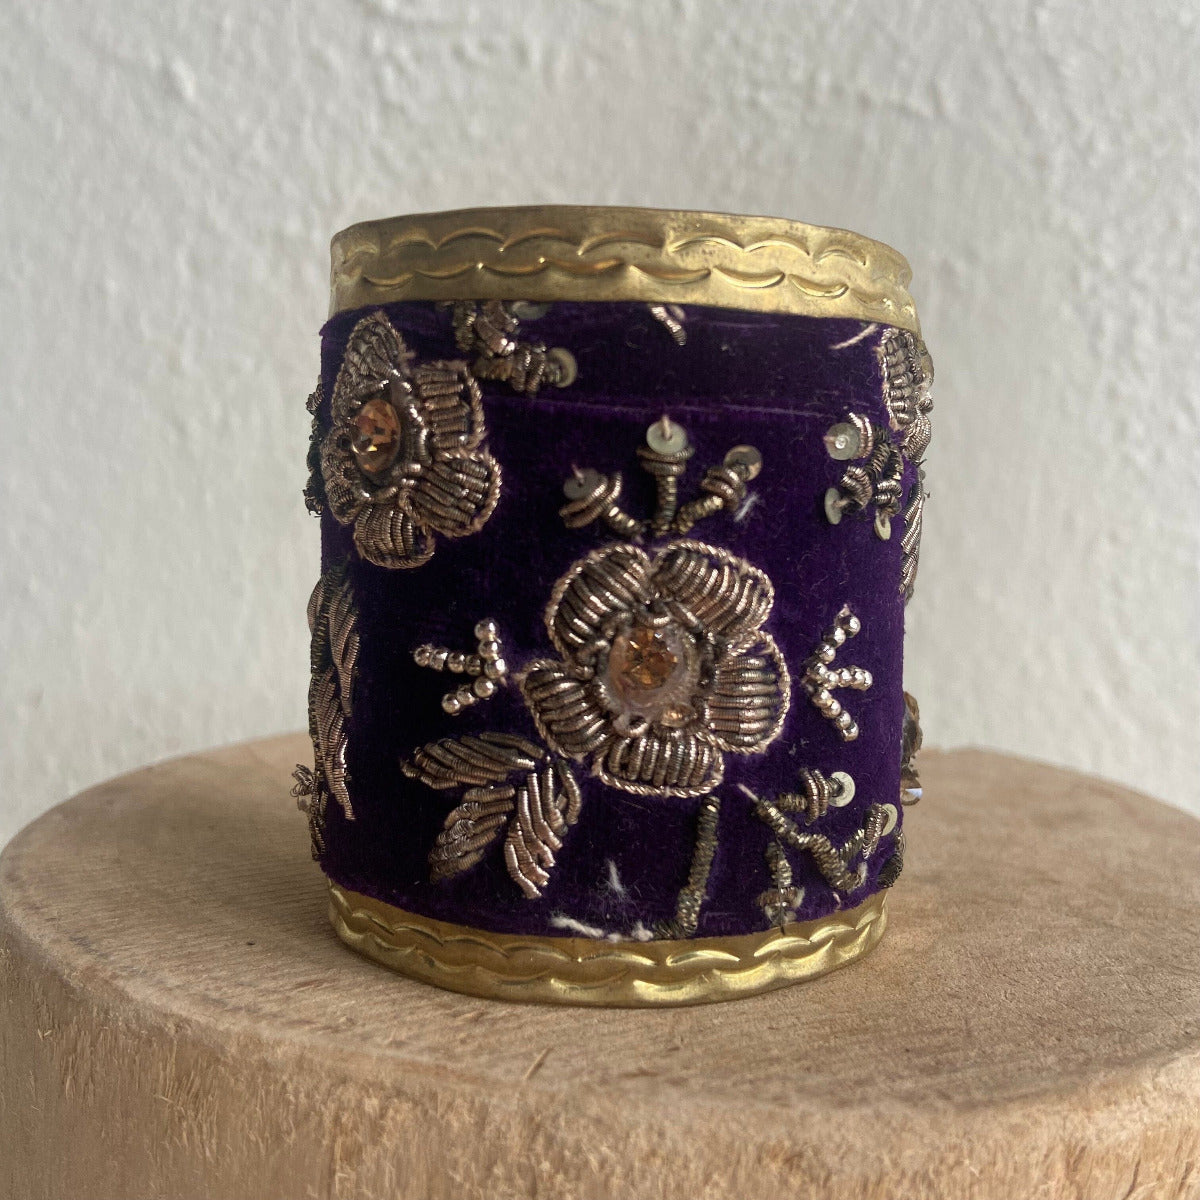 Antique Embroidery Cuff Bracelet | Purple and Gold New Jewelry Eyup Gunduz E 